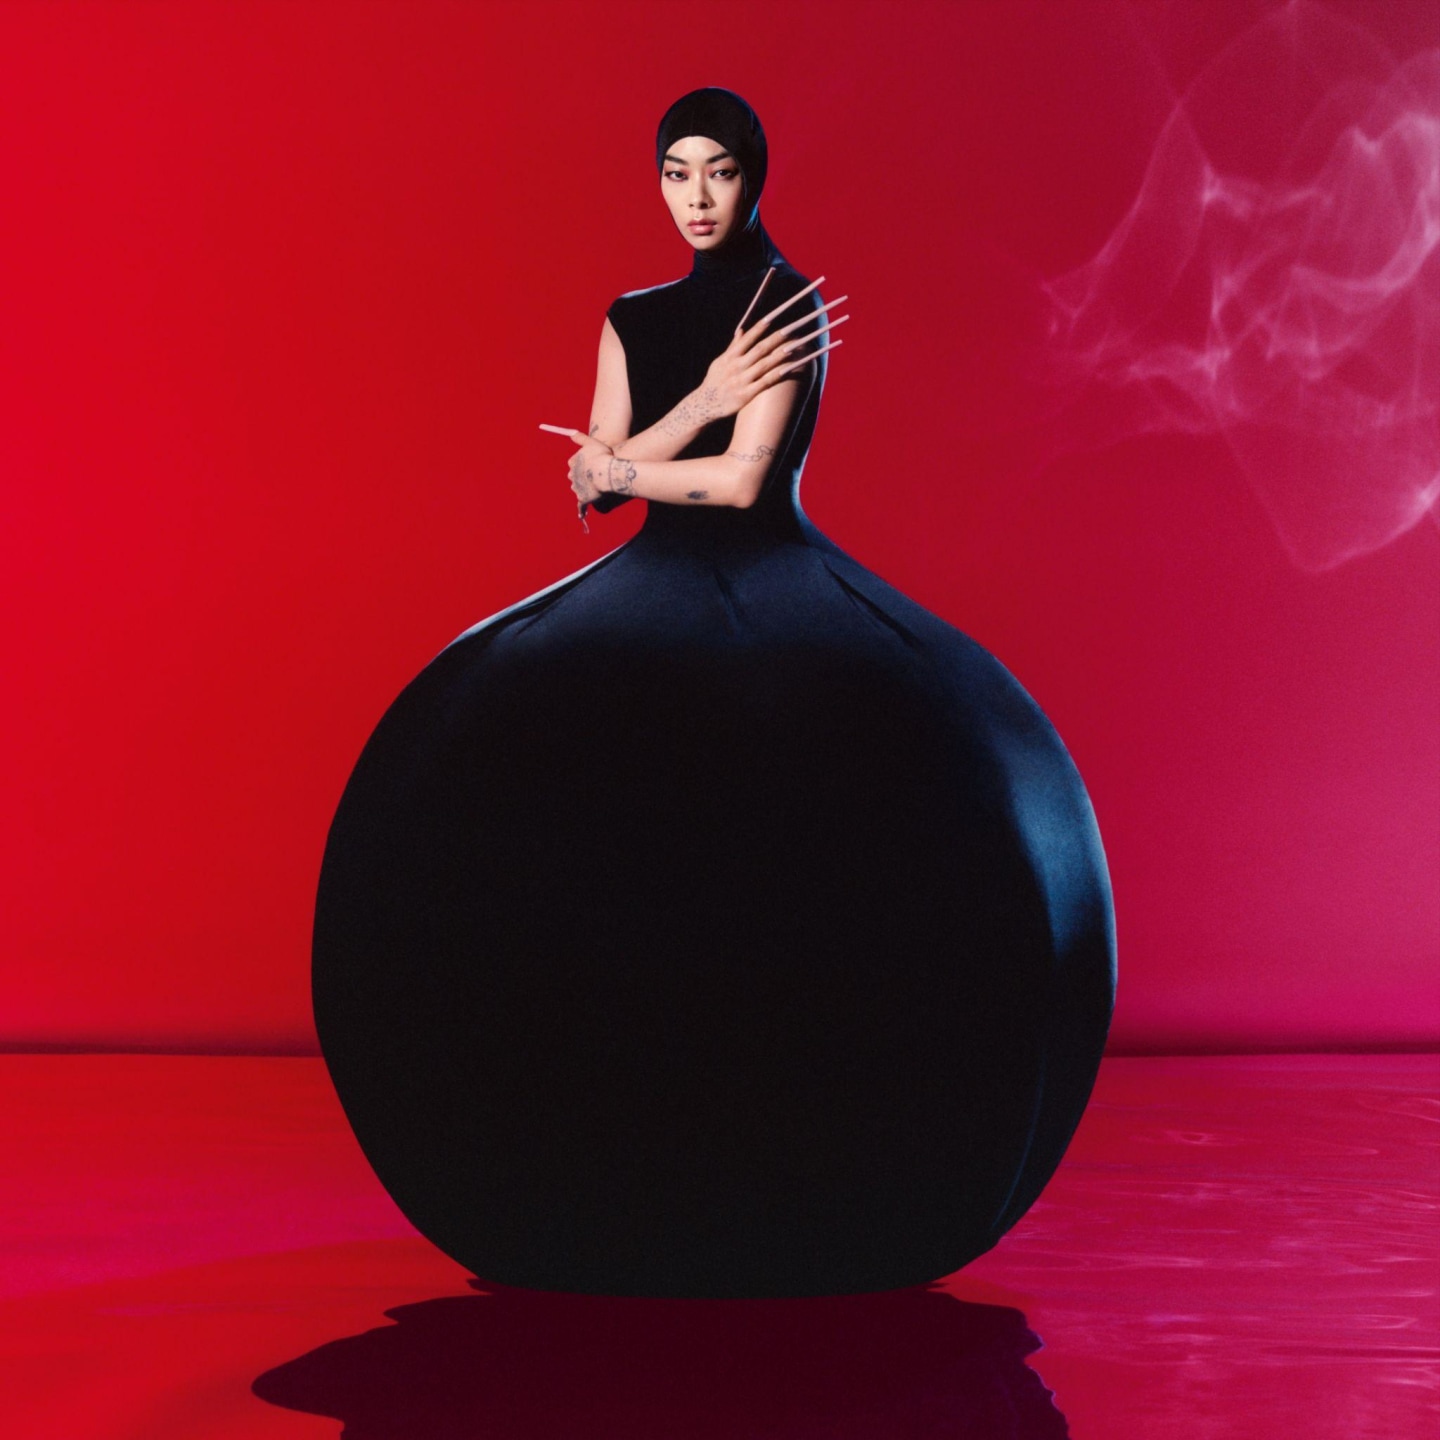 Ready or not, Rina Sawayama is in her pop star era